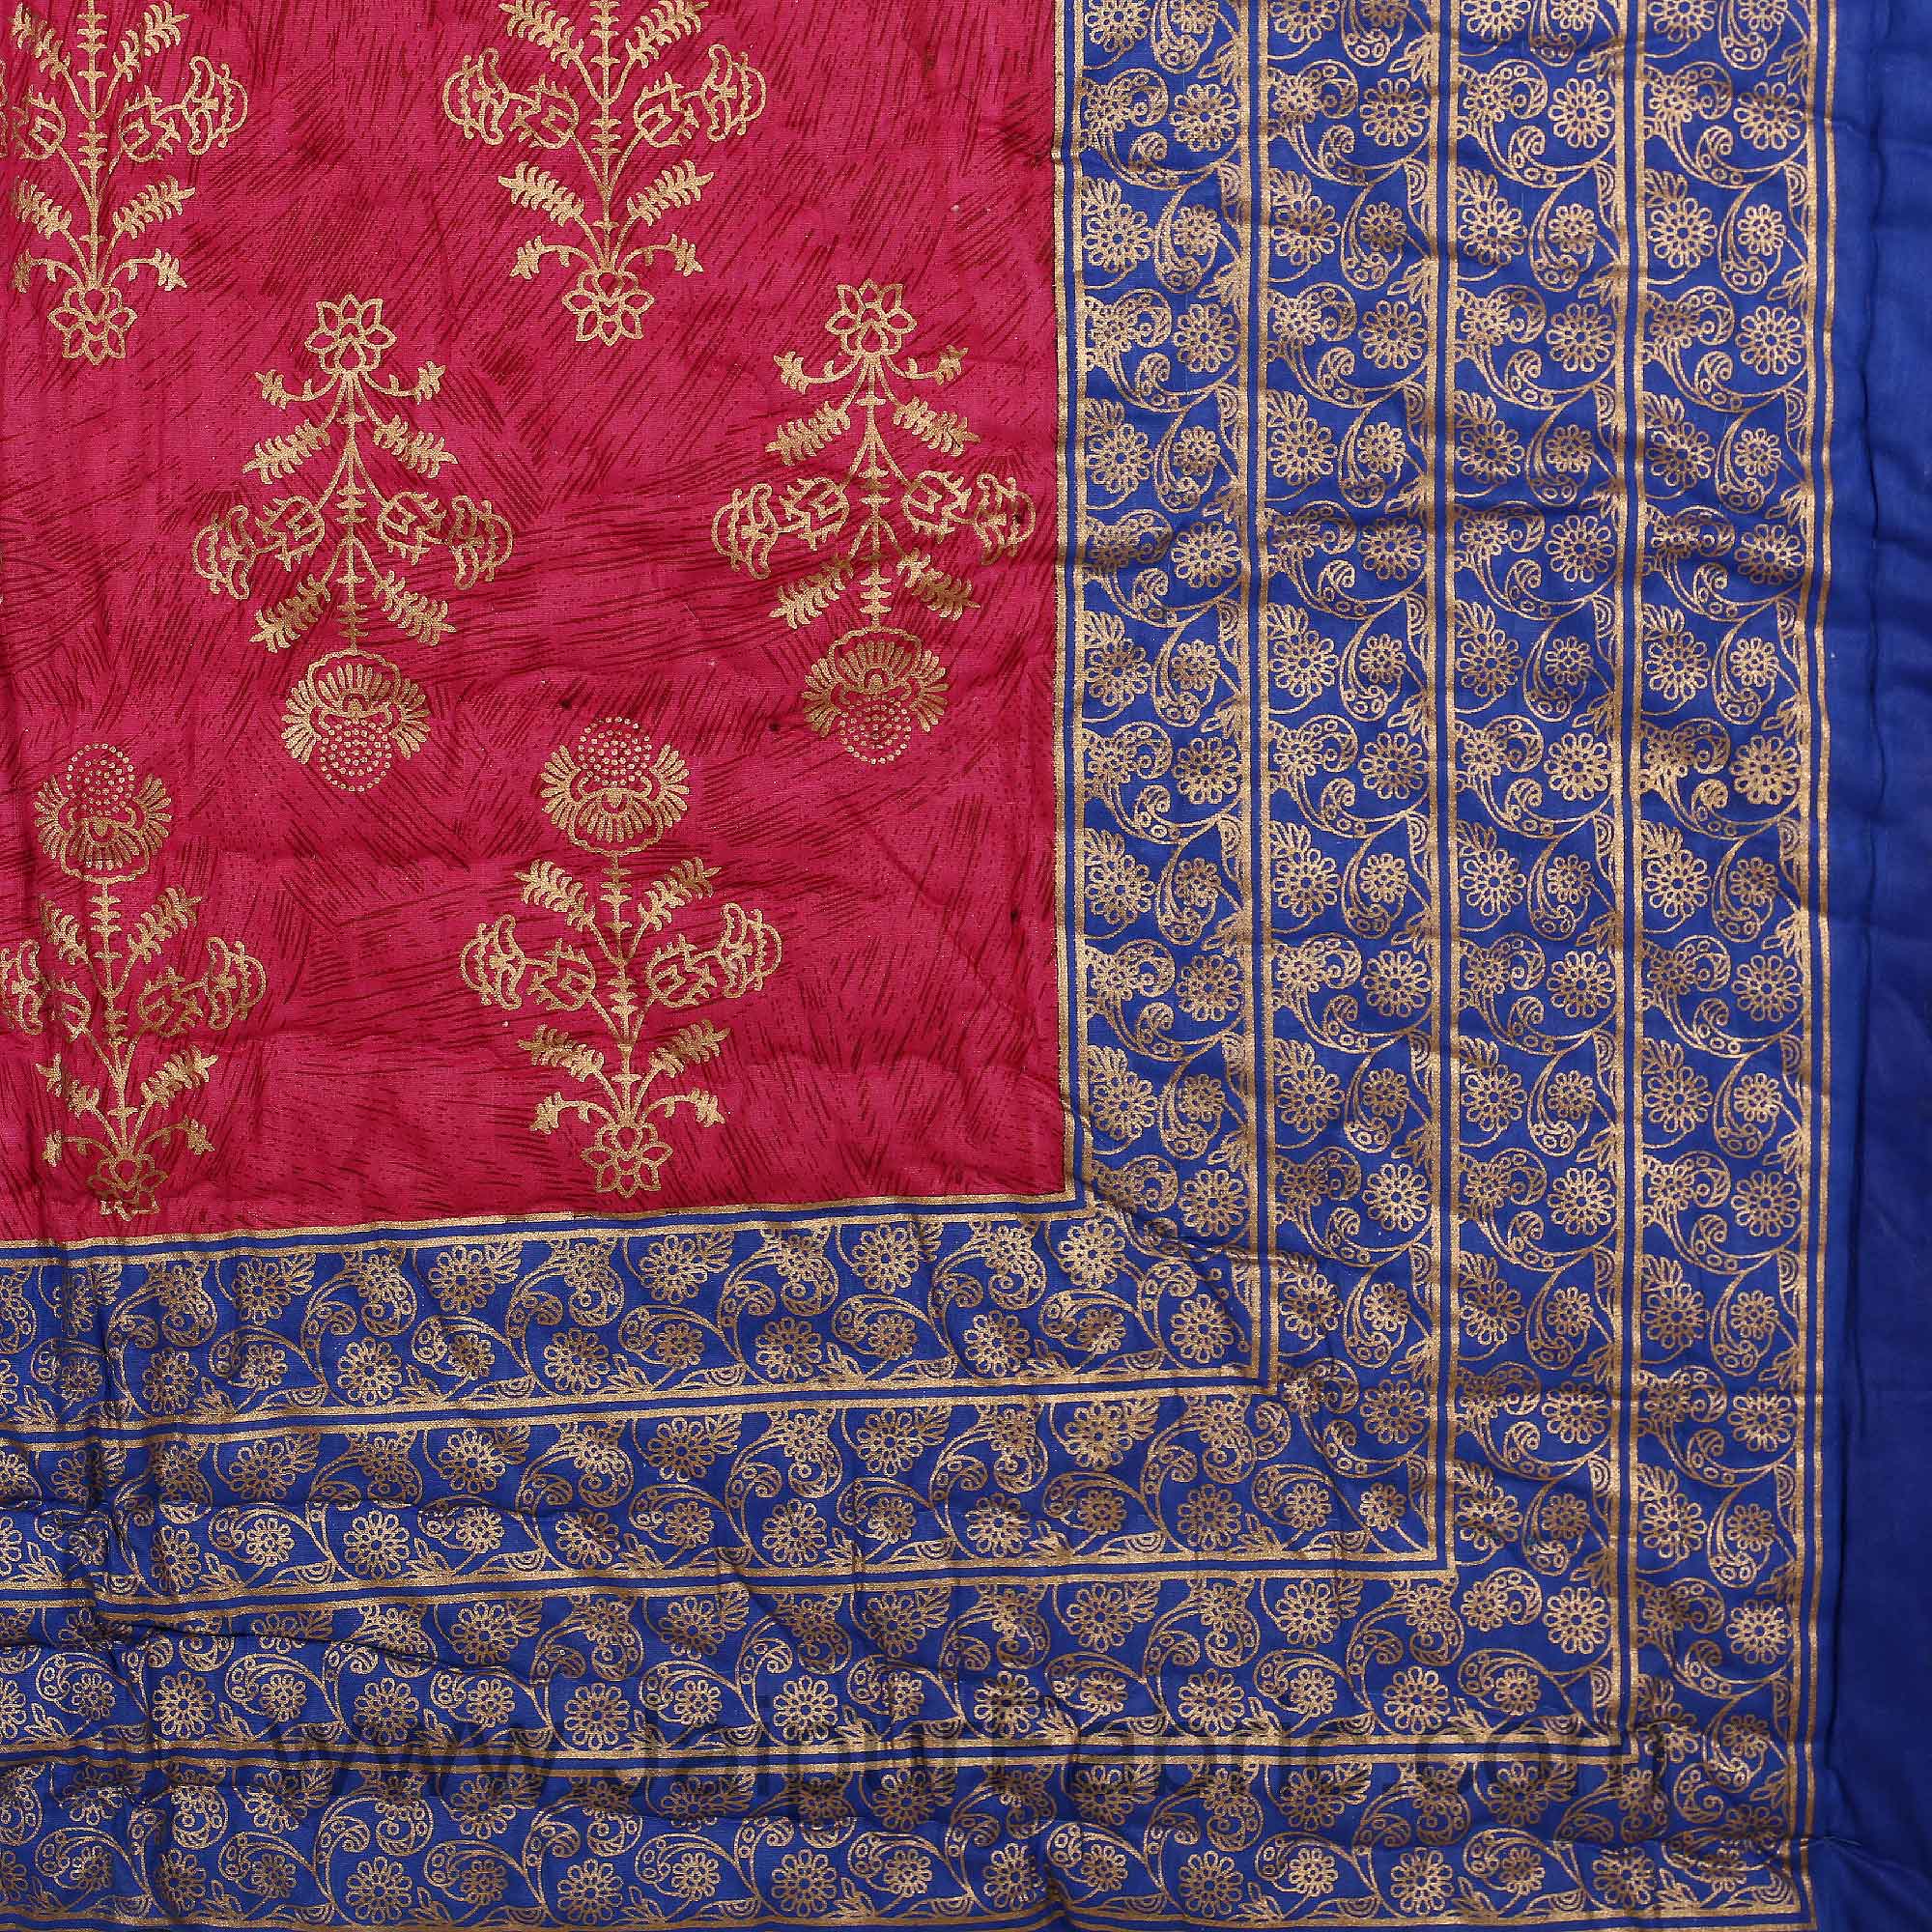 Jaipuri Printed Single Bed Razai Golden Blue And Rani With Leaf Pattern